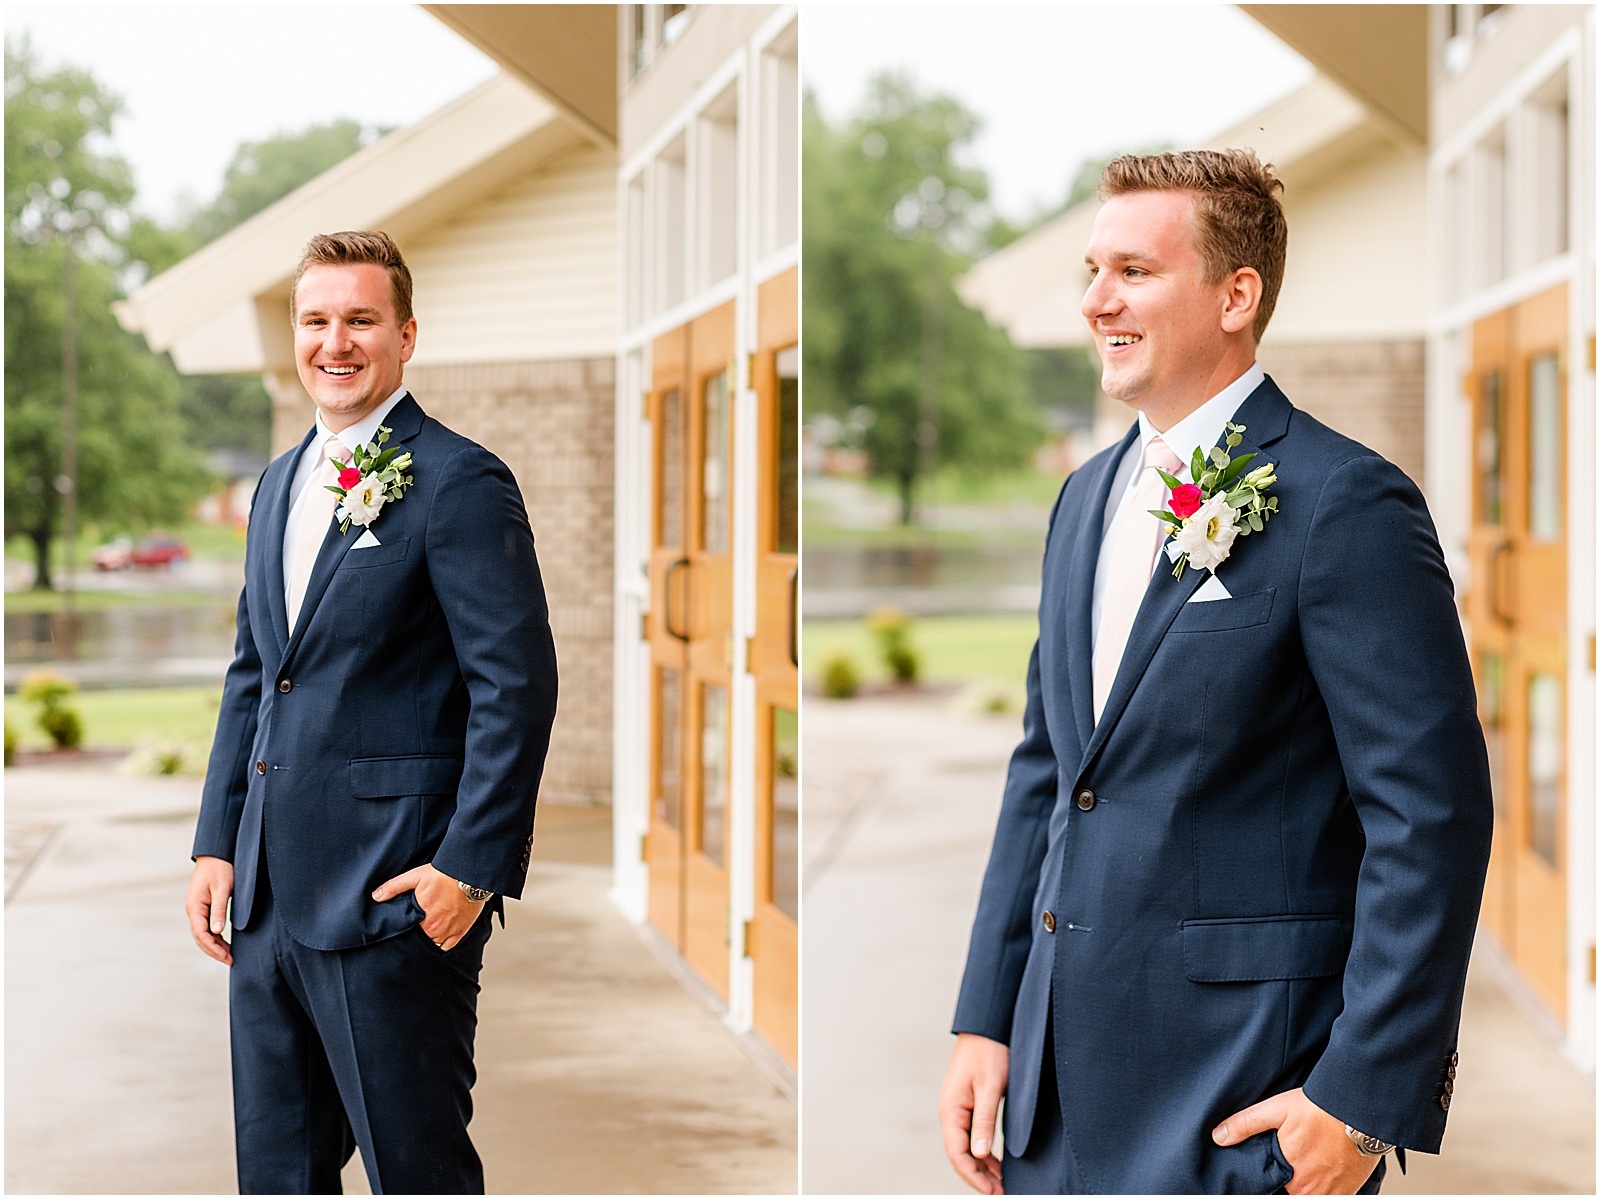 An Evansville Country Club Wedding | Madison and Christiaan | Bret and Brandie | Evansville Photographers | @bretandbrandie-0142.jpg